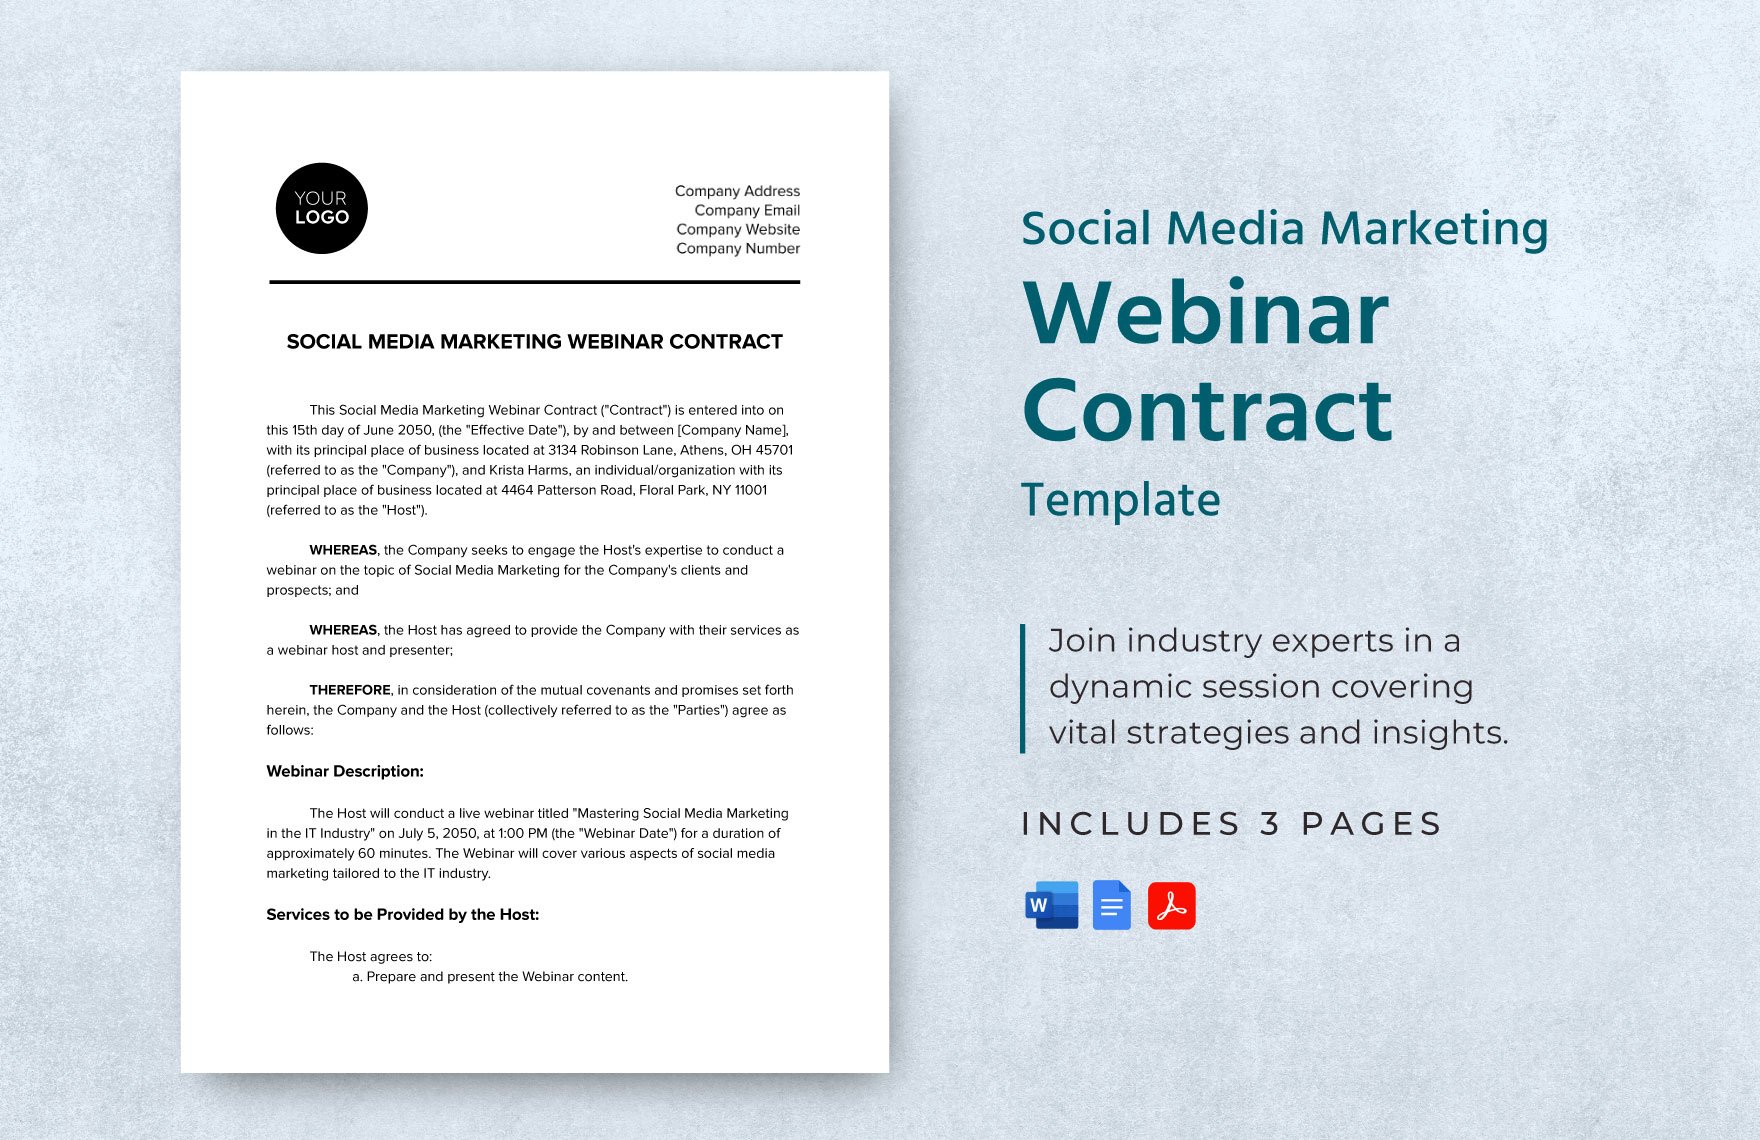 Social Media Marketing Webinar Contract Template in Word, Google Docs, PDF